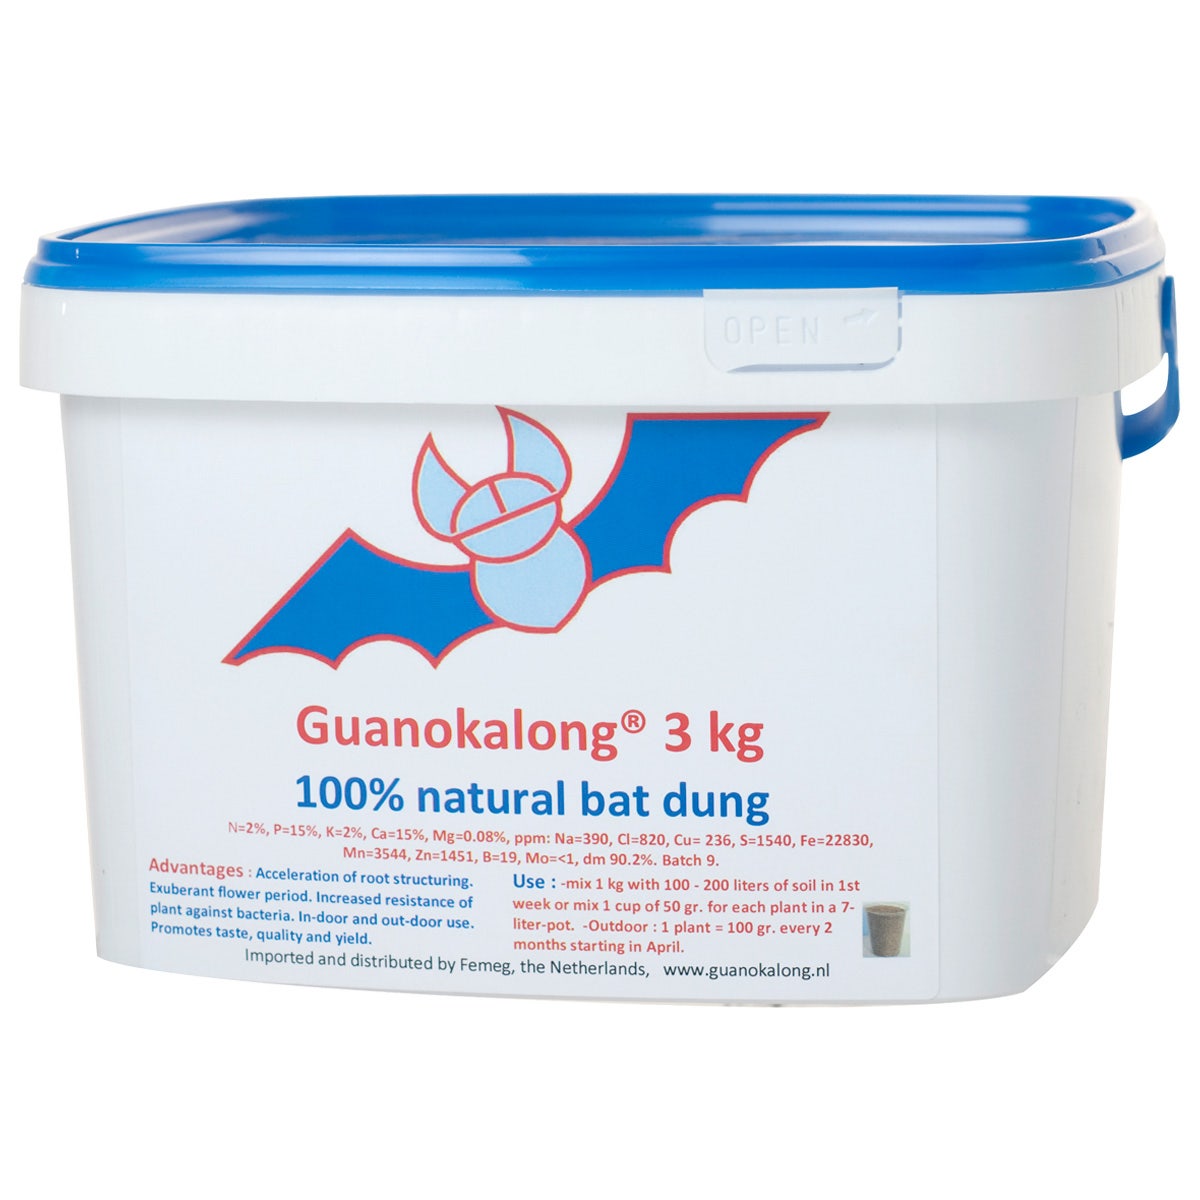 GK-Organics - Guanokalong Powder